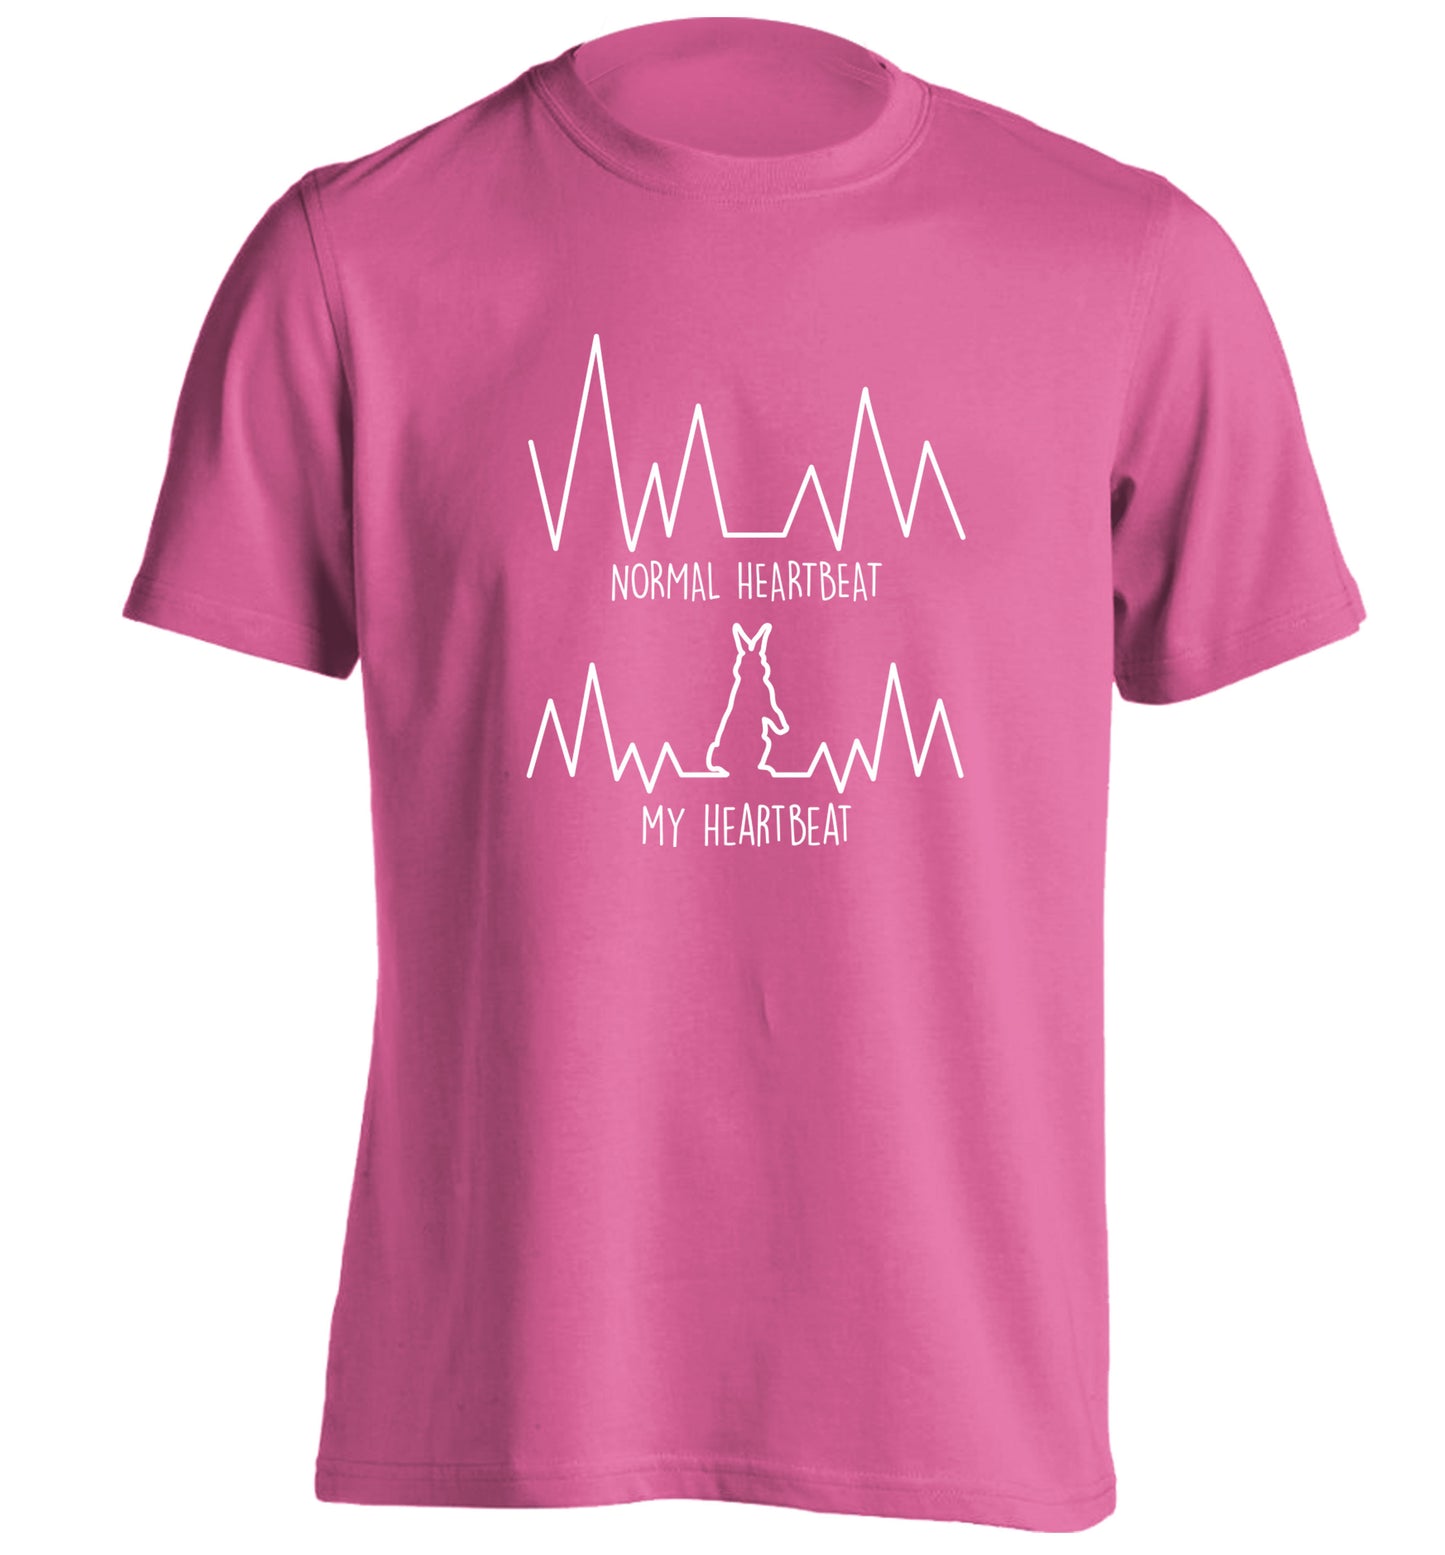 Normal heartbeat, my heartbeat rabbit lover adults unisex pink Tshirt 2XL